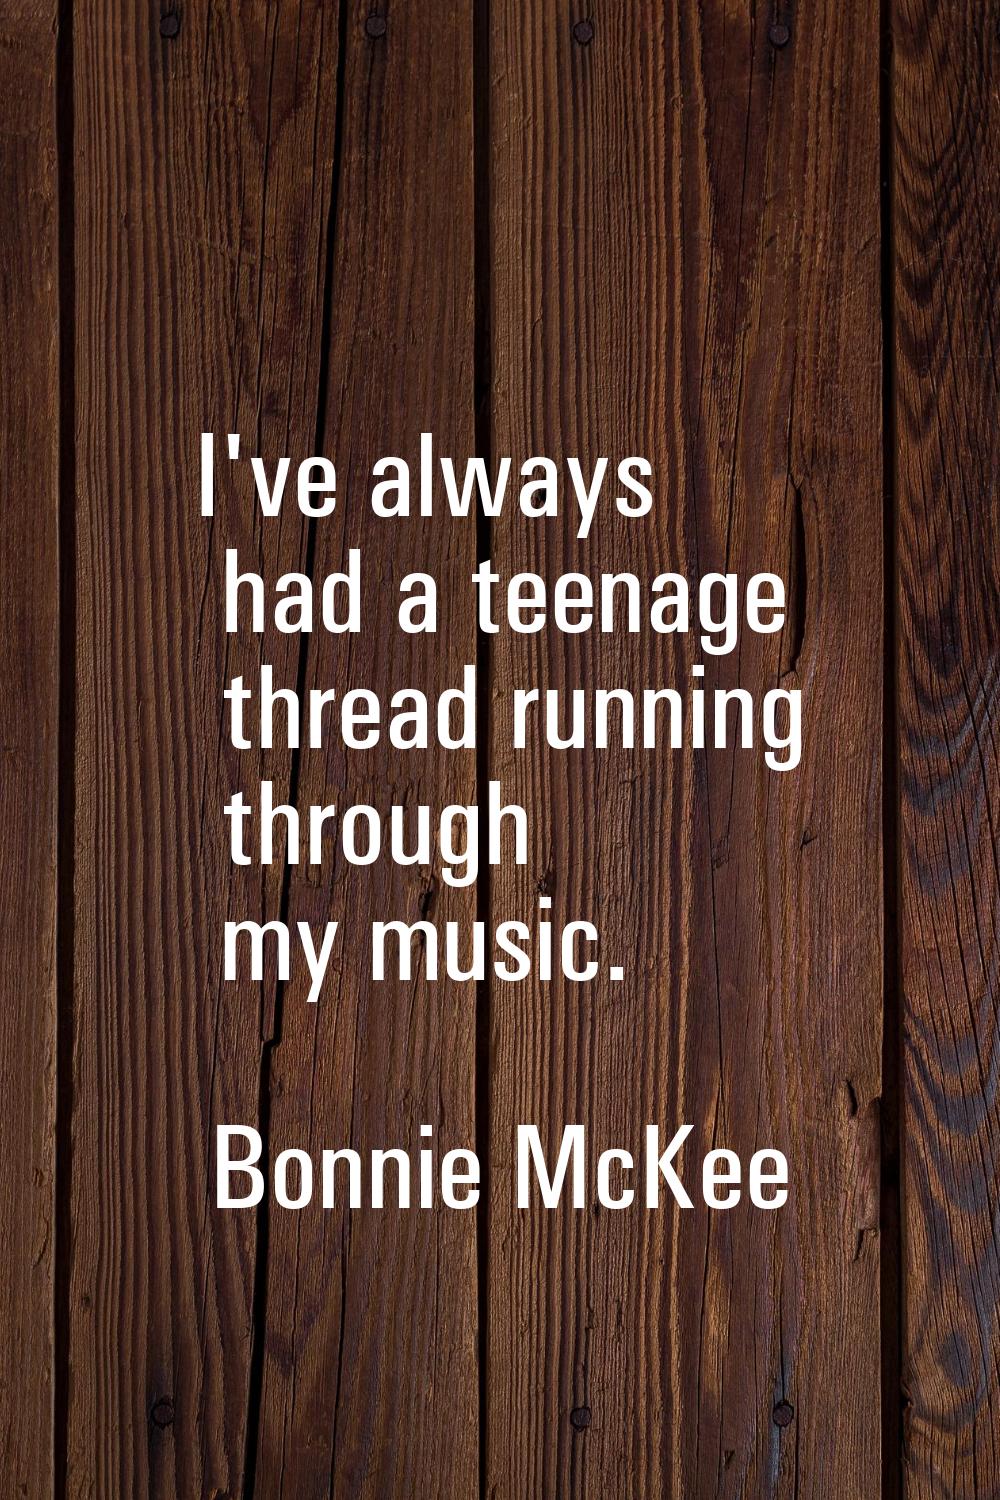 I've always had a teenage thread running through my music.